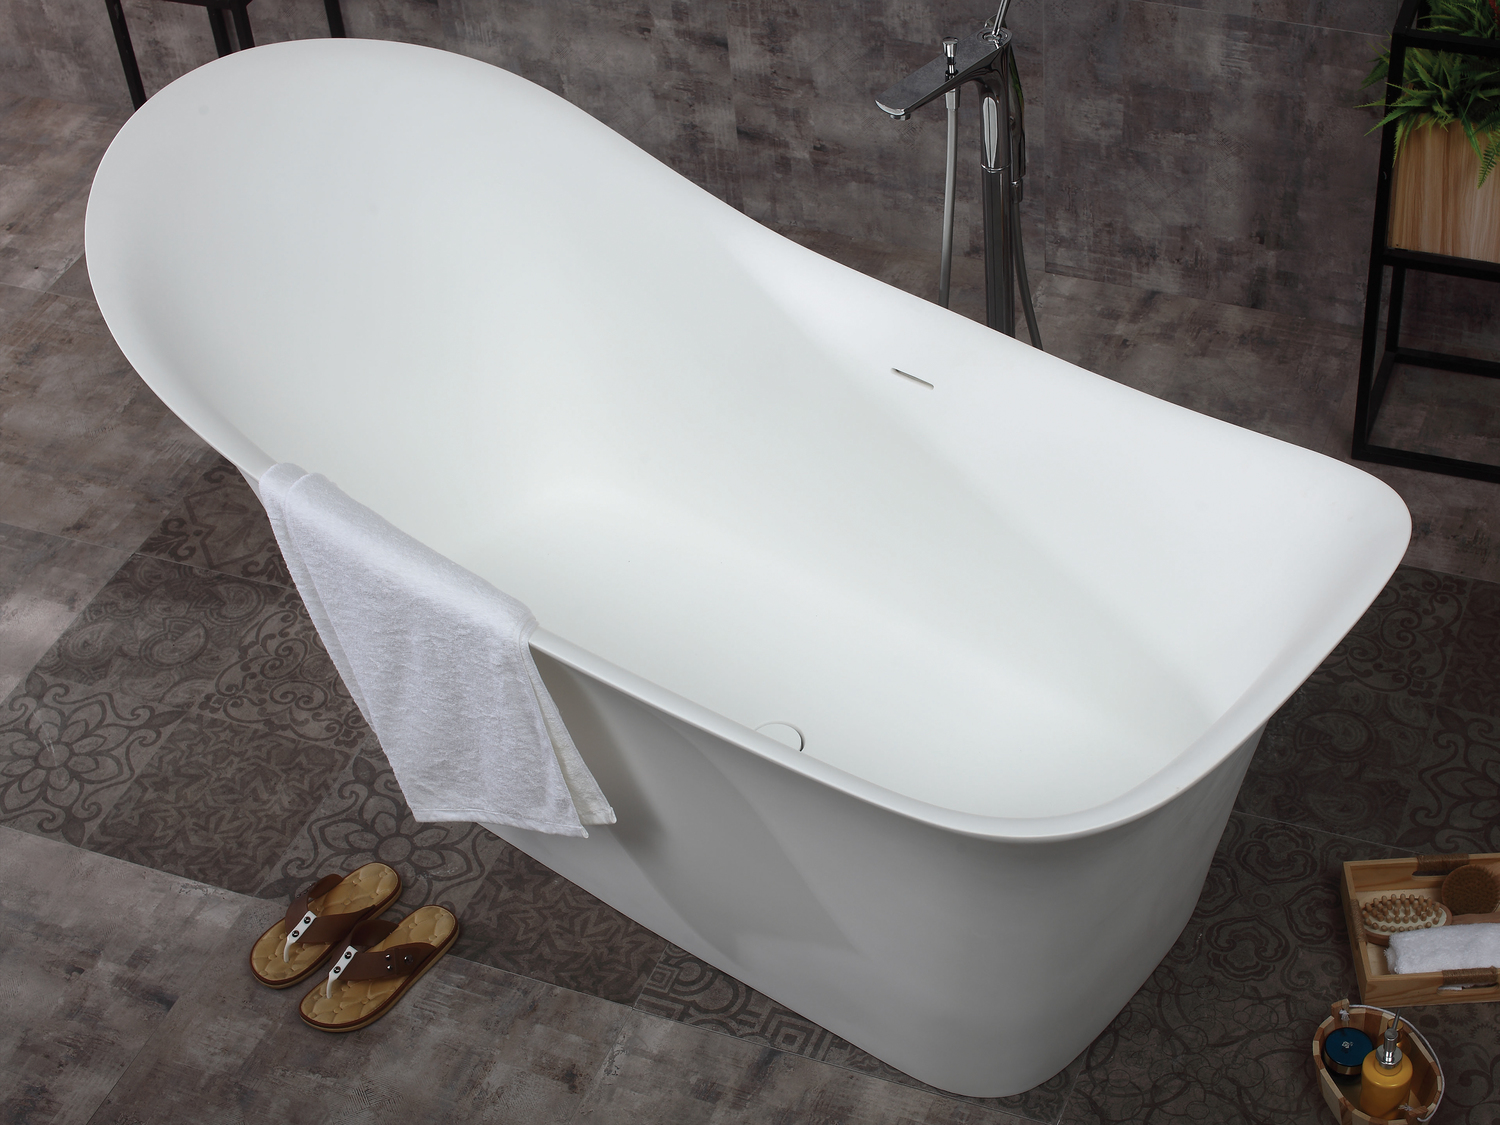 fitting a free standing bath Alfi Tub Matte White Modern